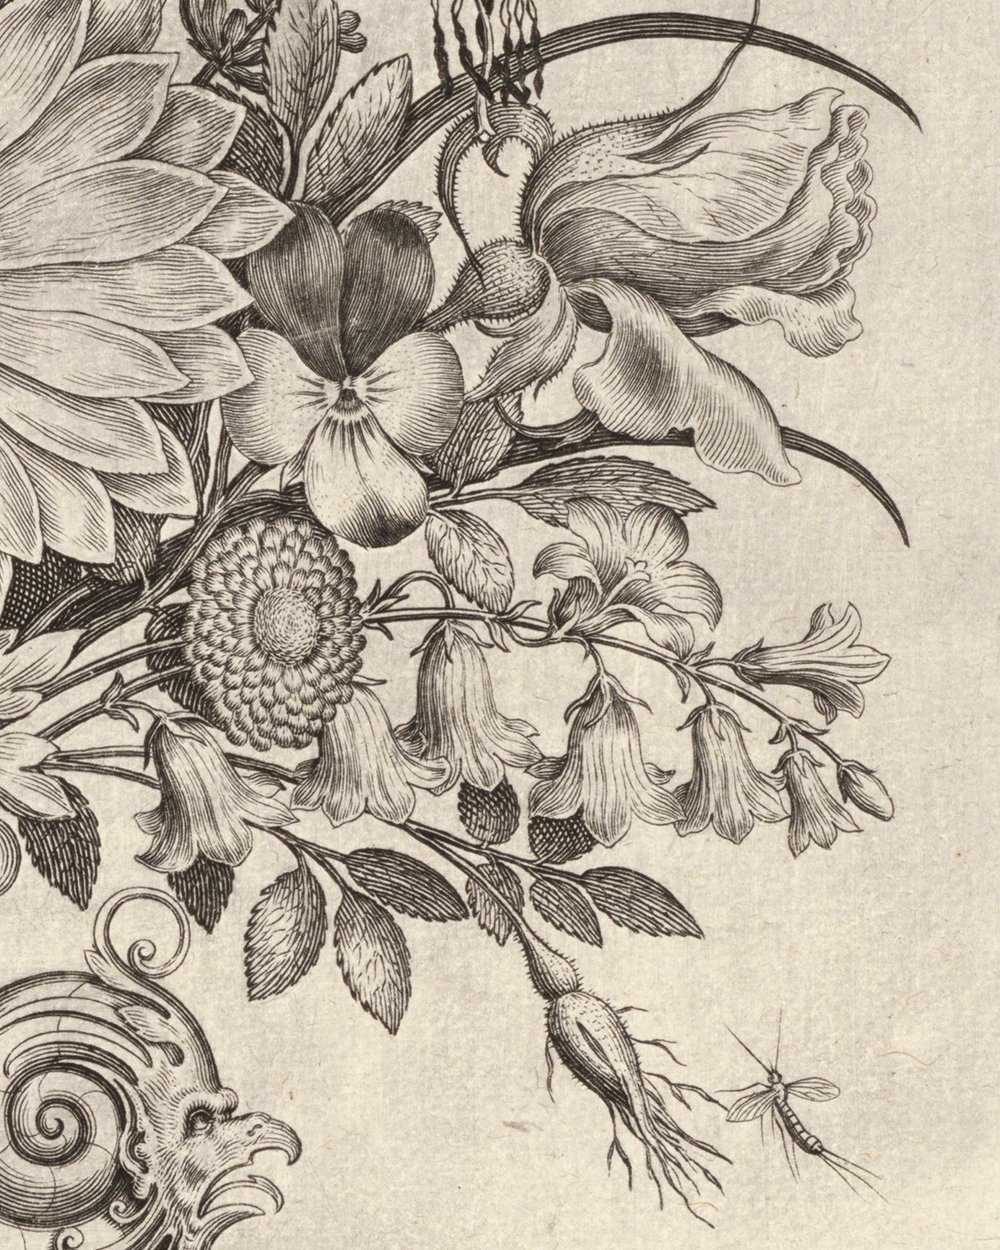 "Polyptoton de Flore (The Variance of Flowers)" (1600)